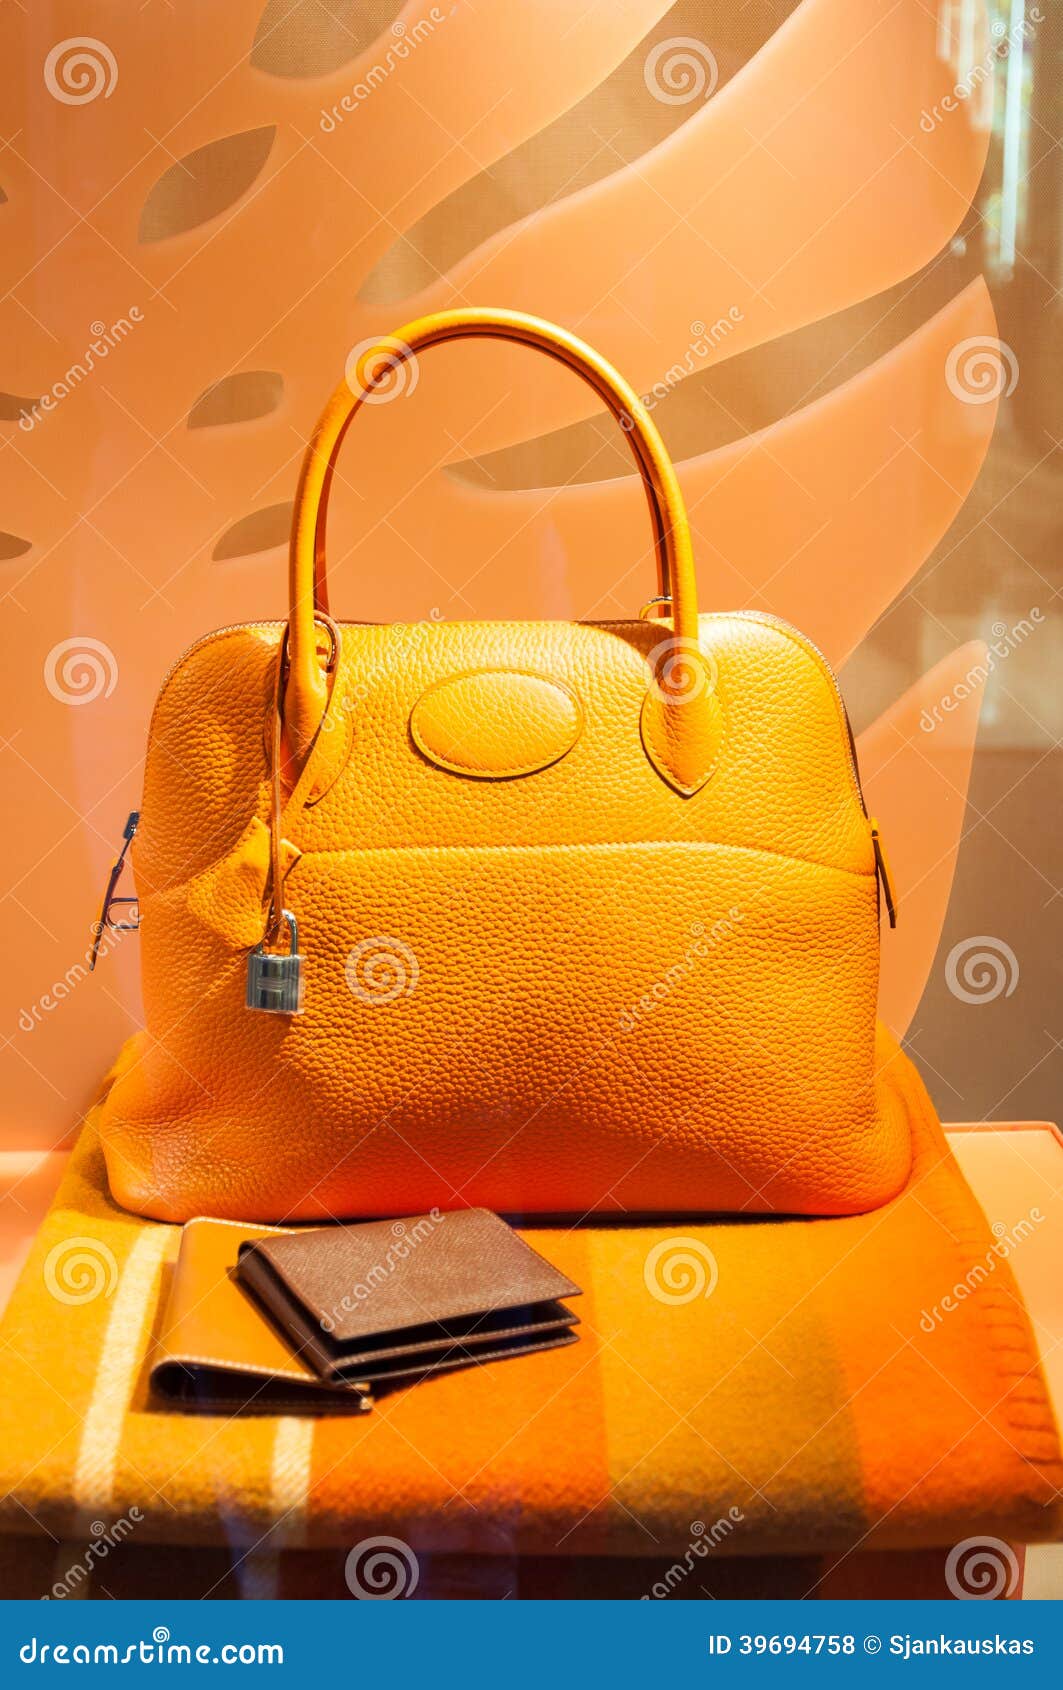 fashion store handbag window display